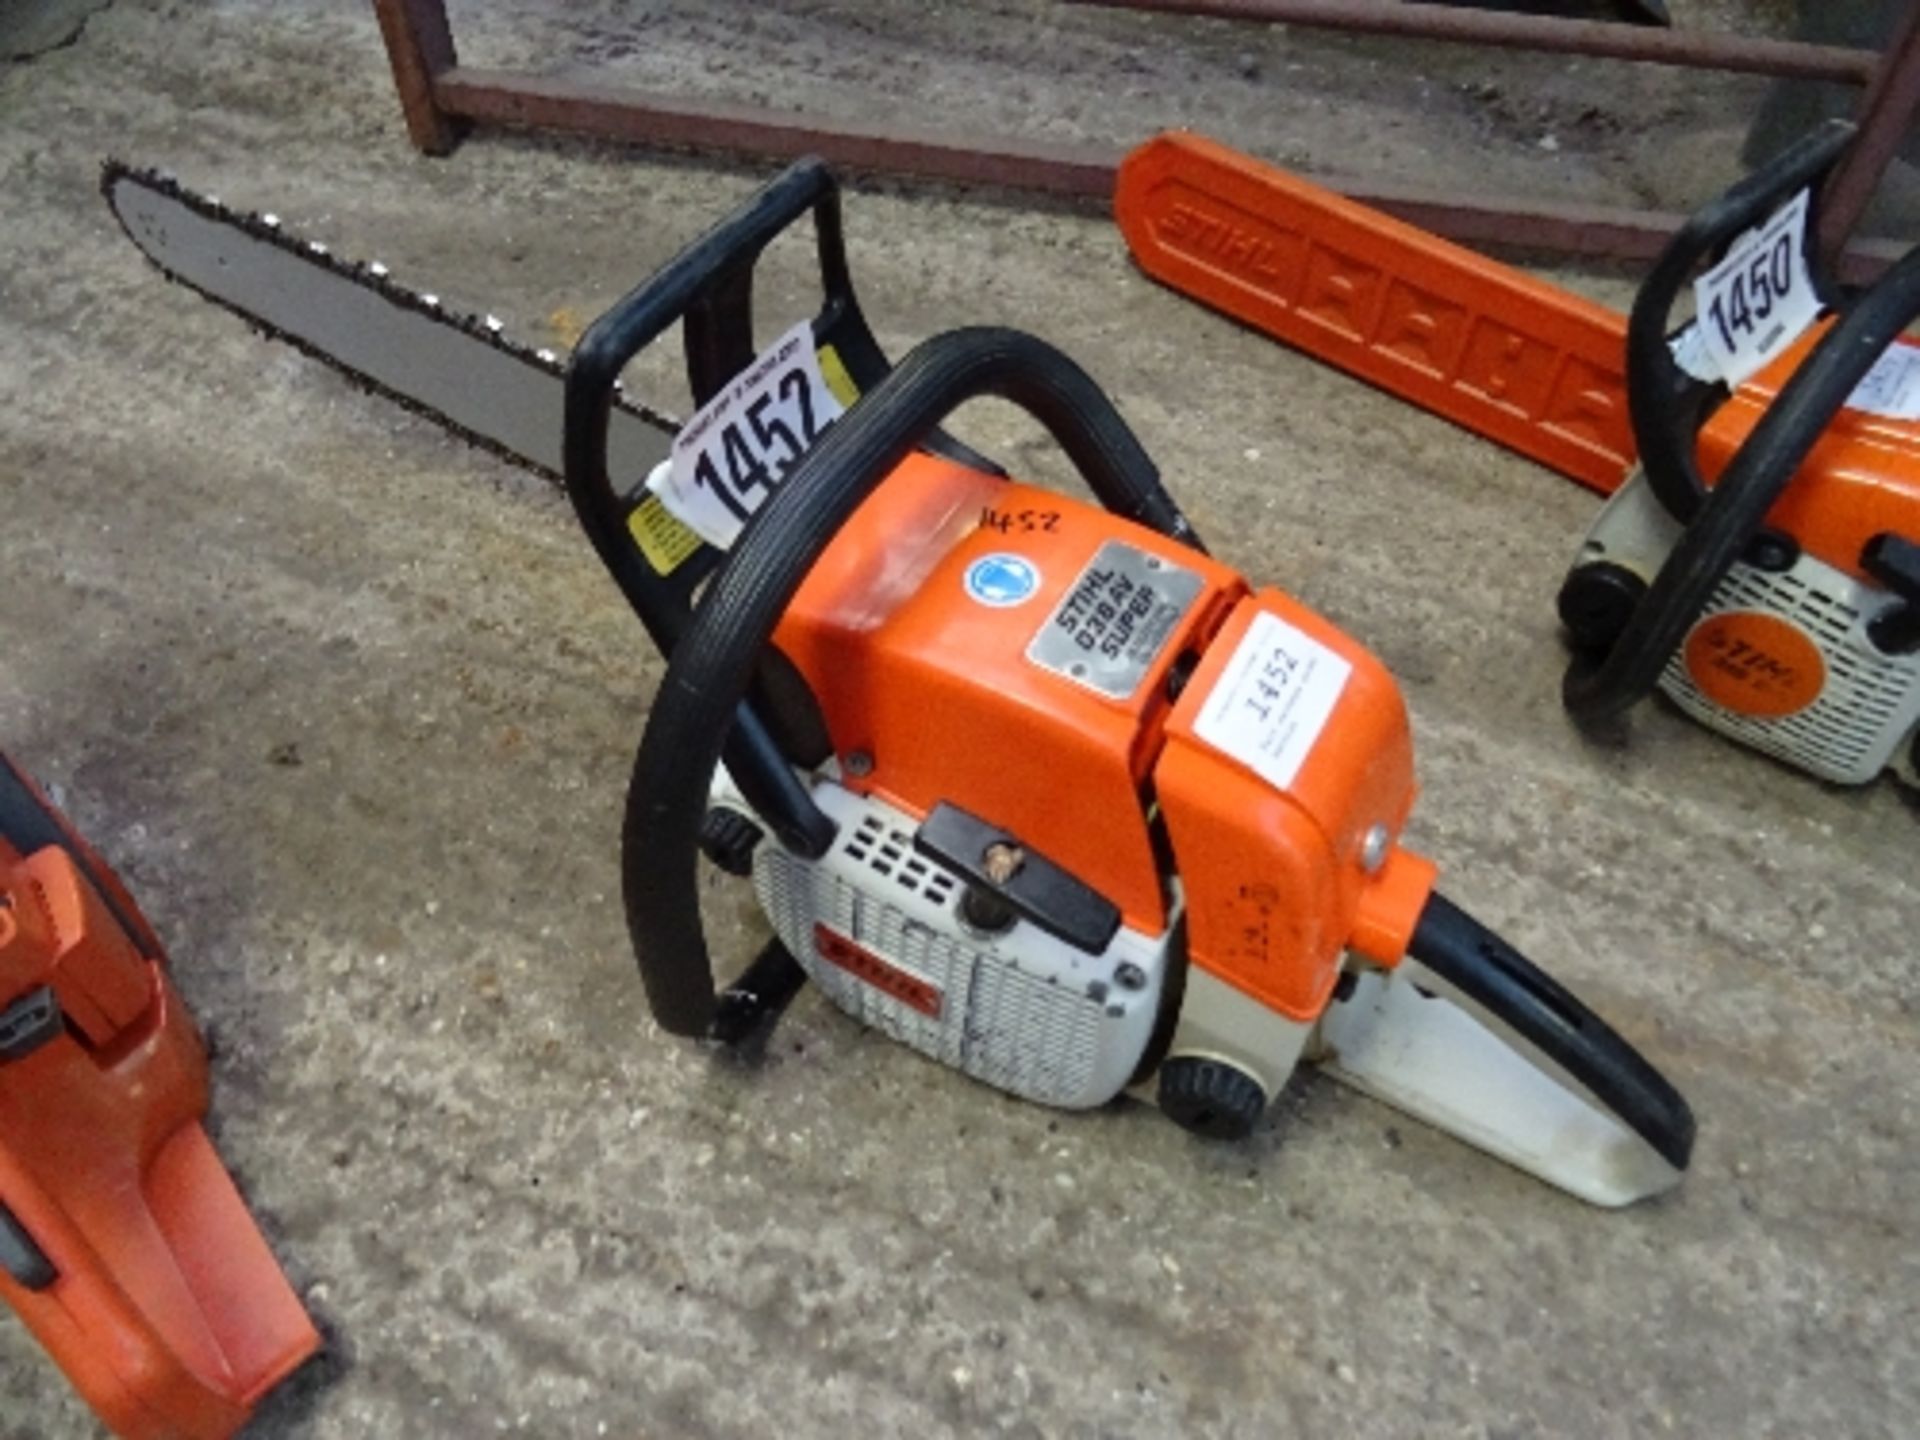 Stihl 038 AV super petrol chain saw